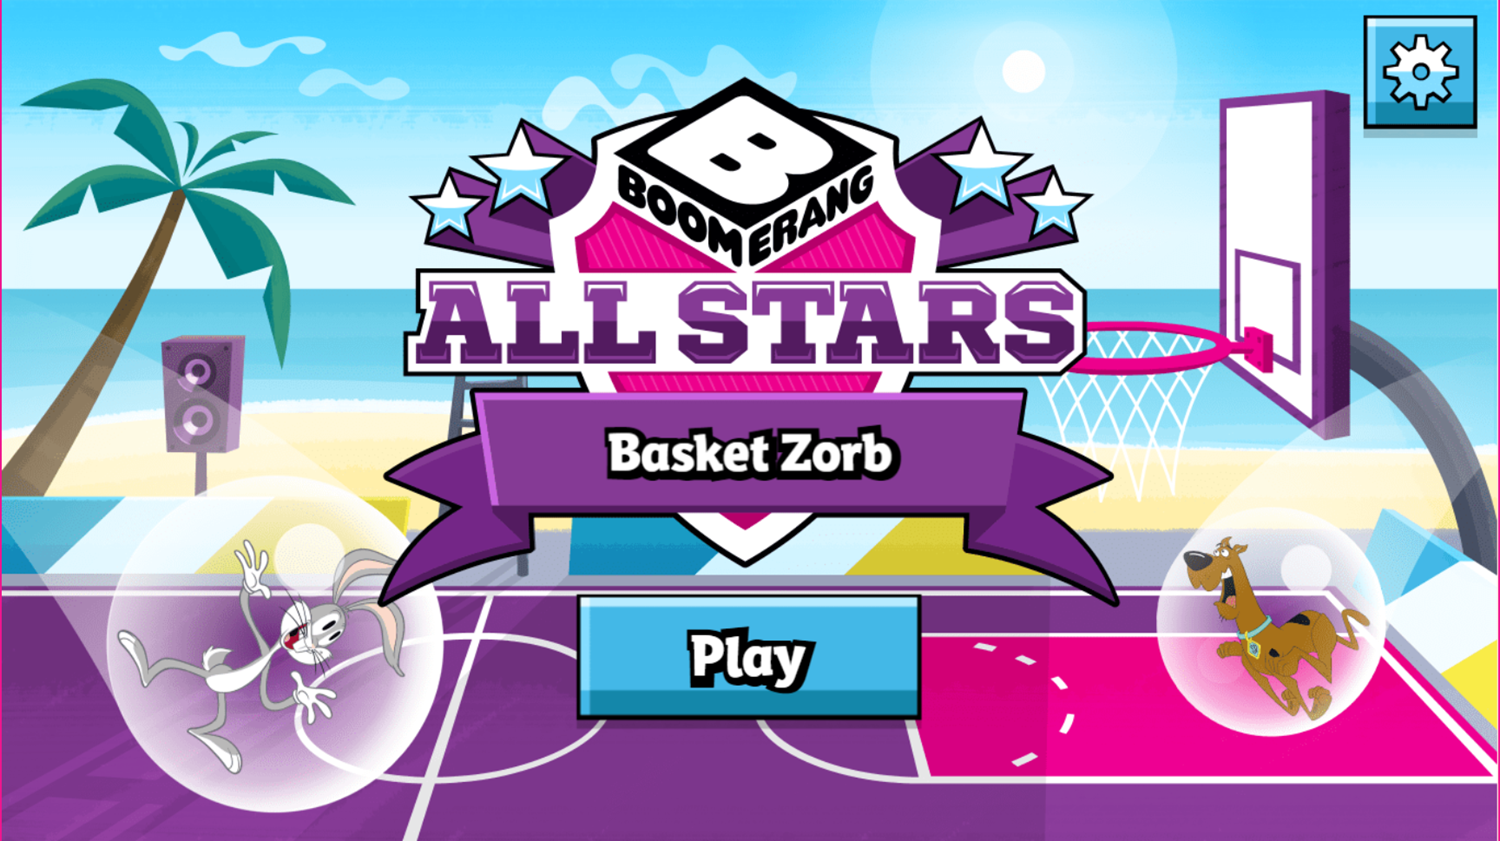 Boomerang All Stars Basket Zorb Game Welcome Screen Screenshot.